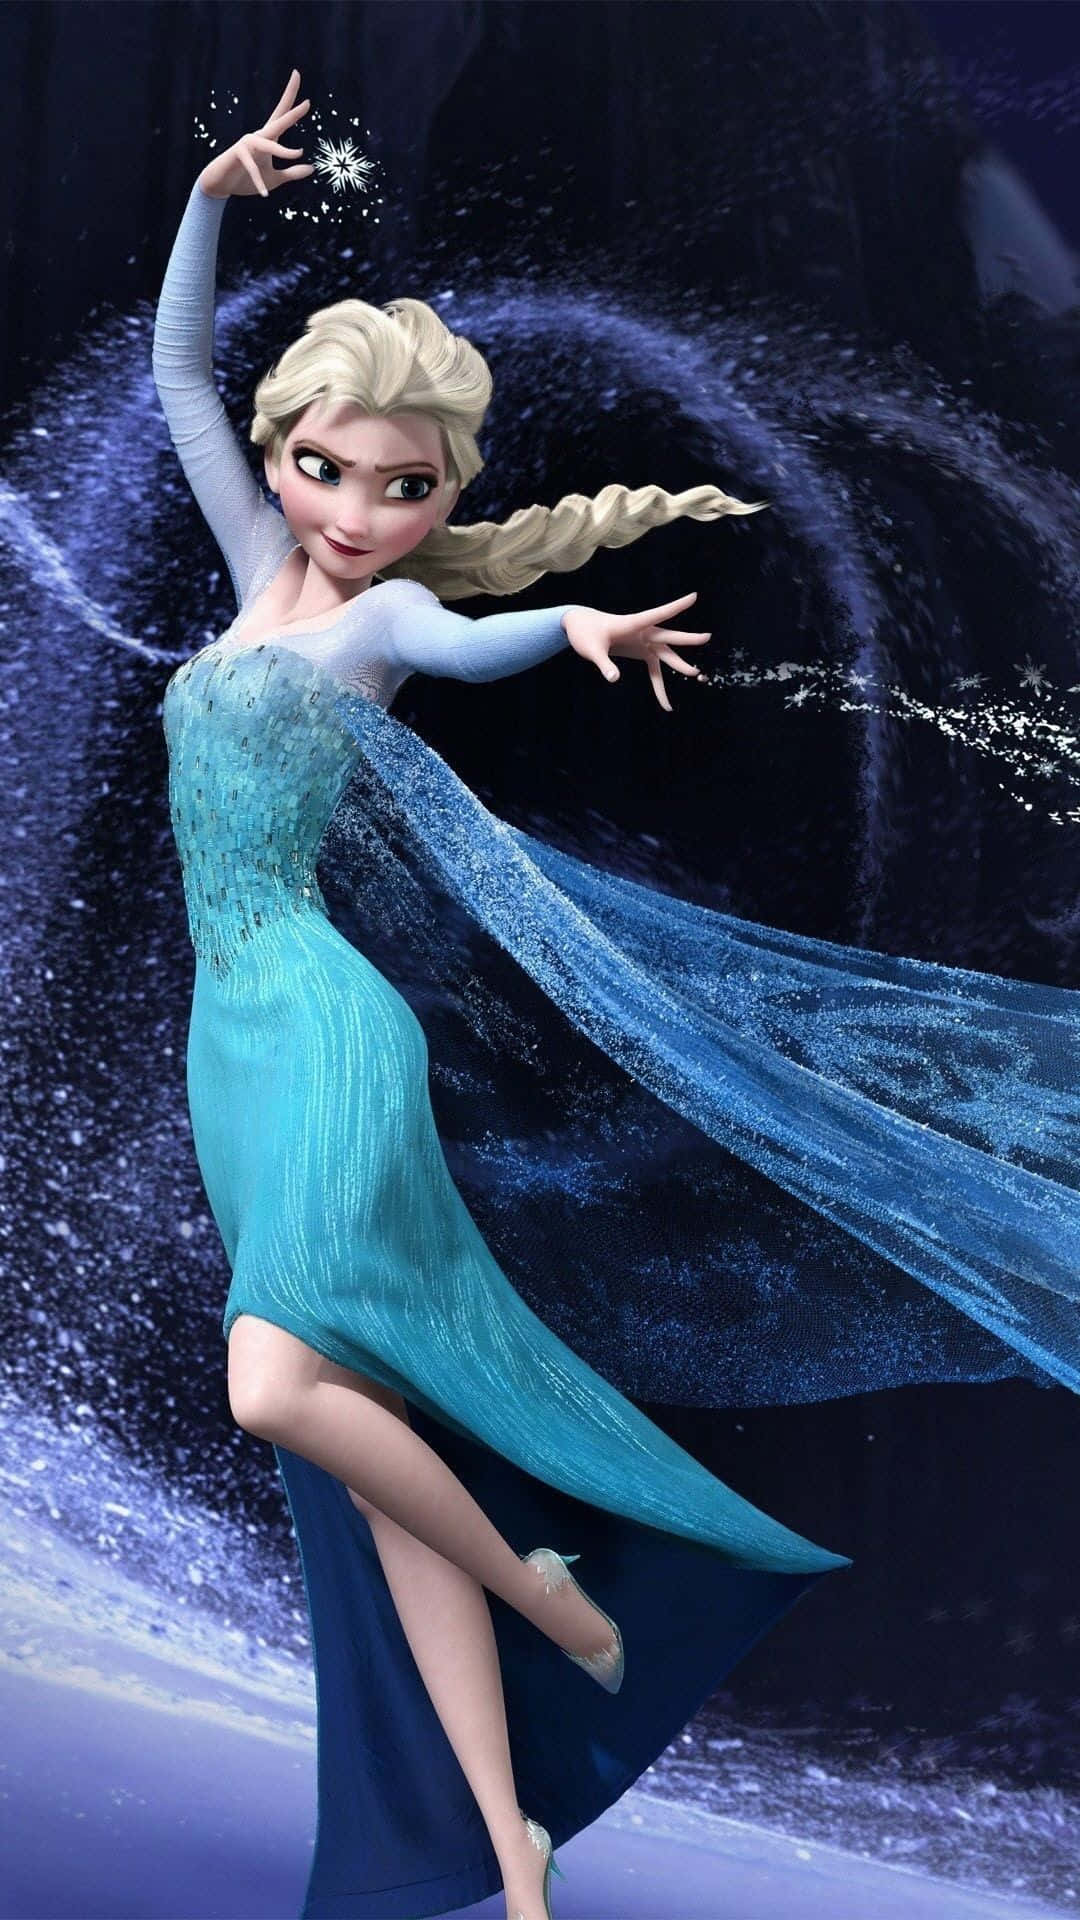 'Frozen' star Elsa stands in full glory